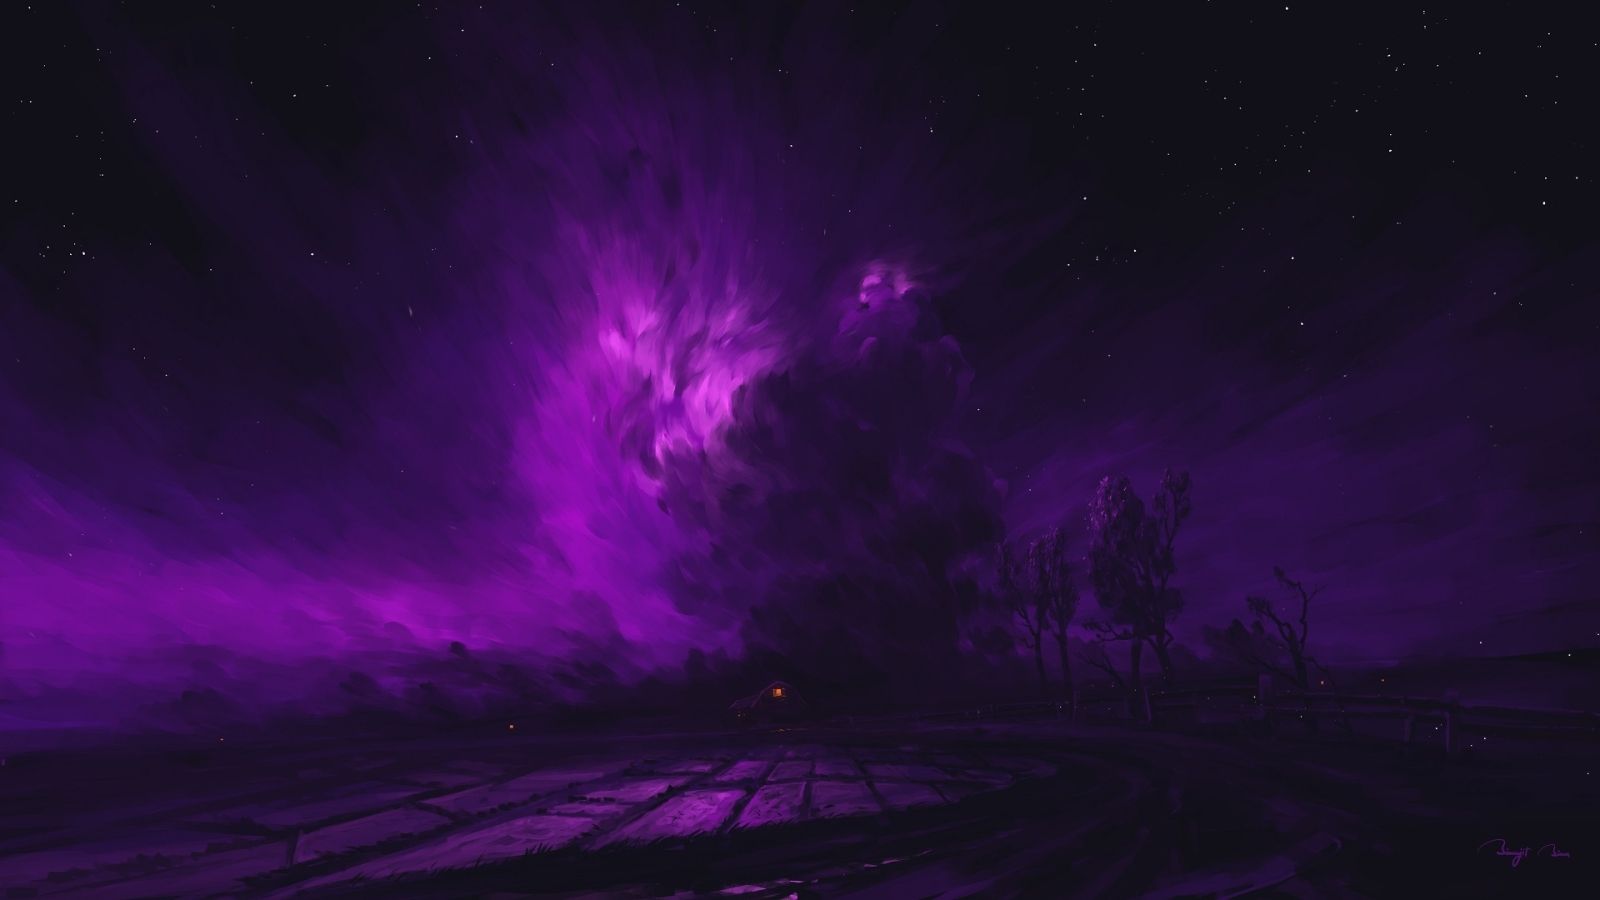 1600x900 Hintergrundbild 1600x900. Glowing Purple Cloud Art 1600x900 Resolution Wallpaper, HD Artist 4K Wallpaper, Image, Photo and Background